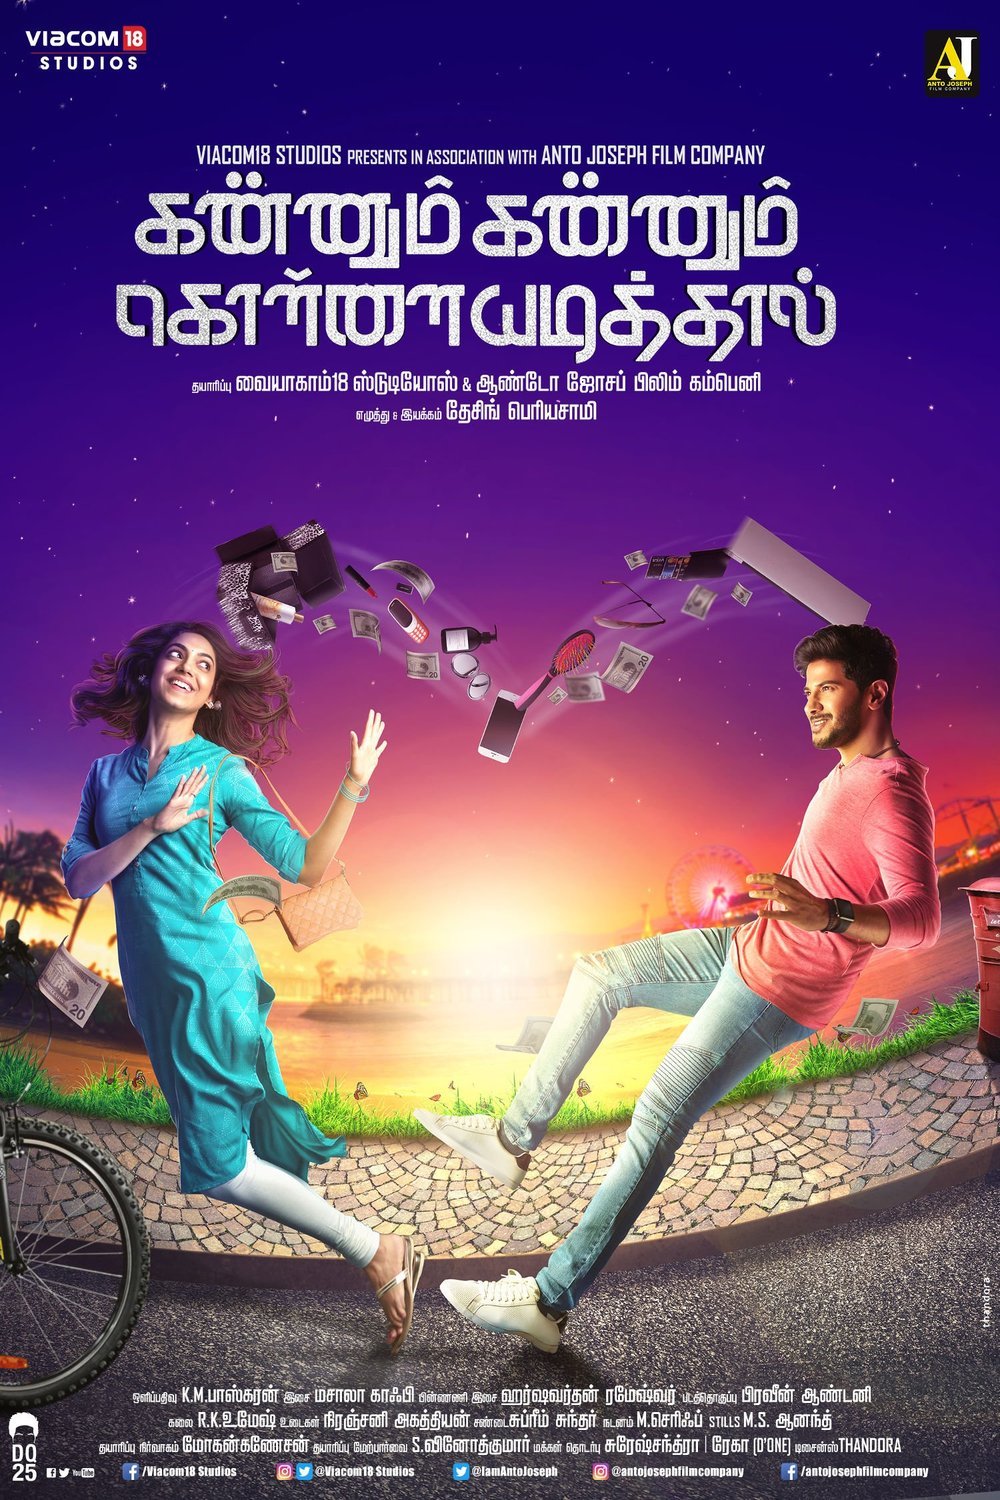 L'affiche du film Kannum Kannum Kollaiyadithaal